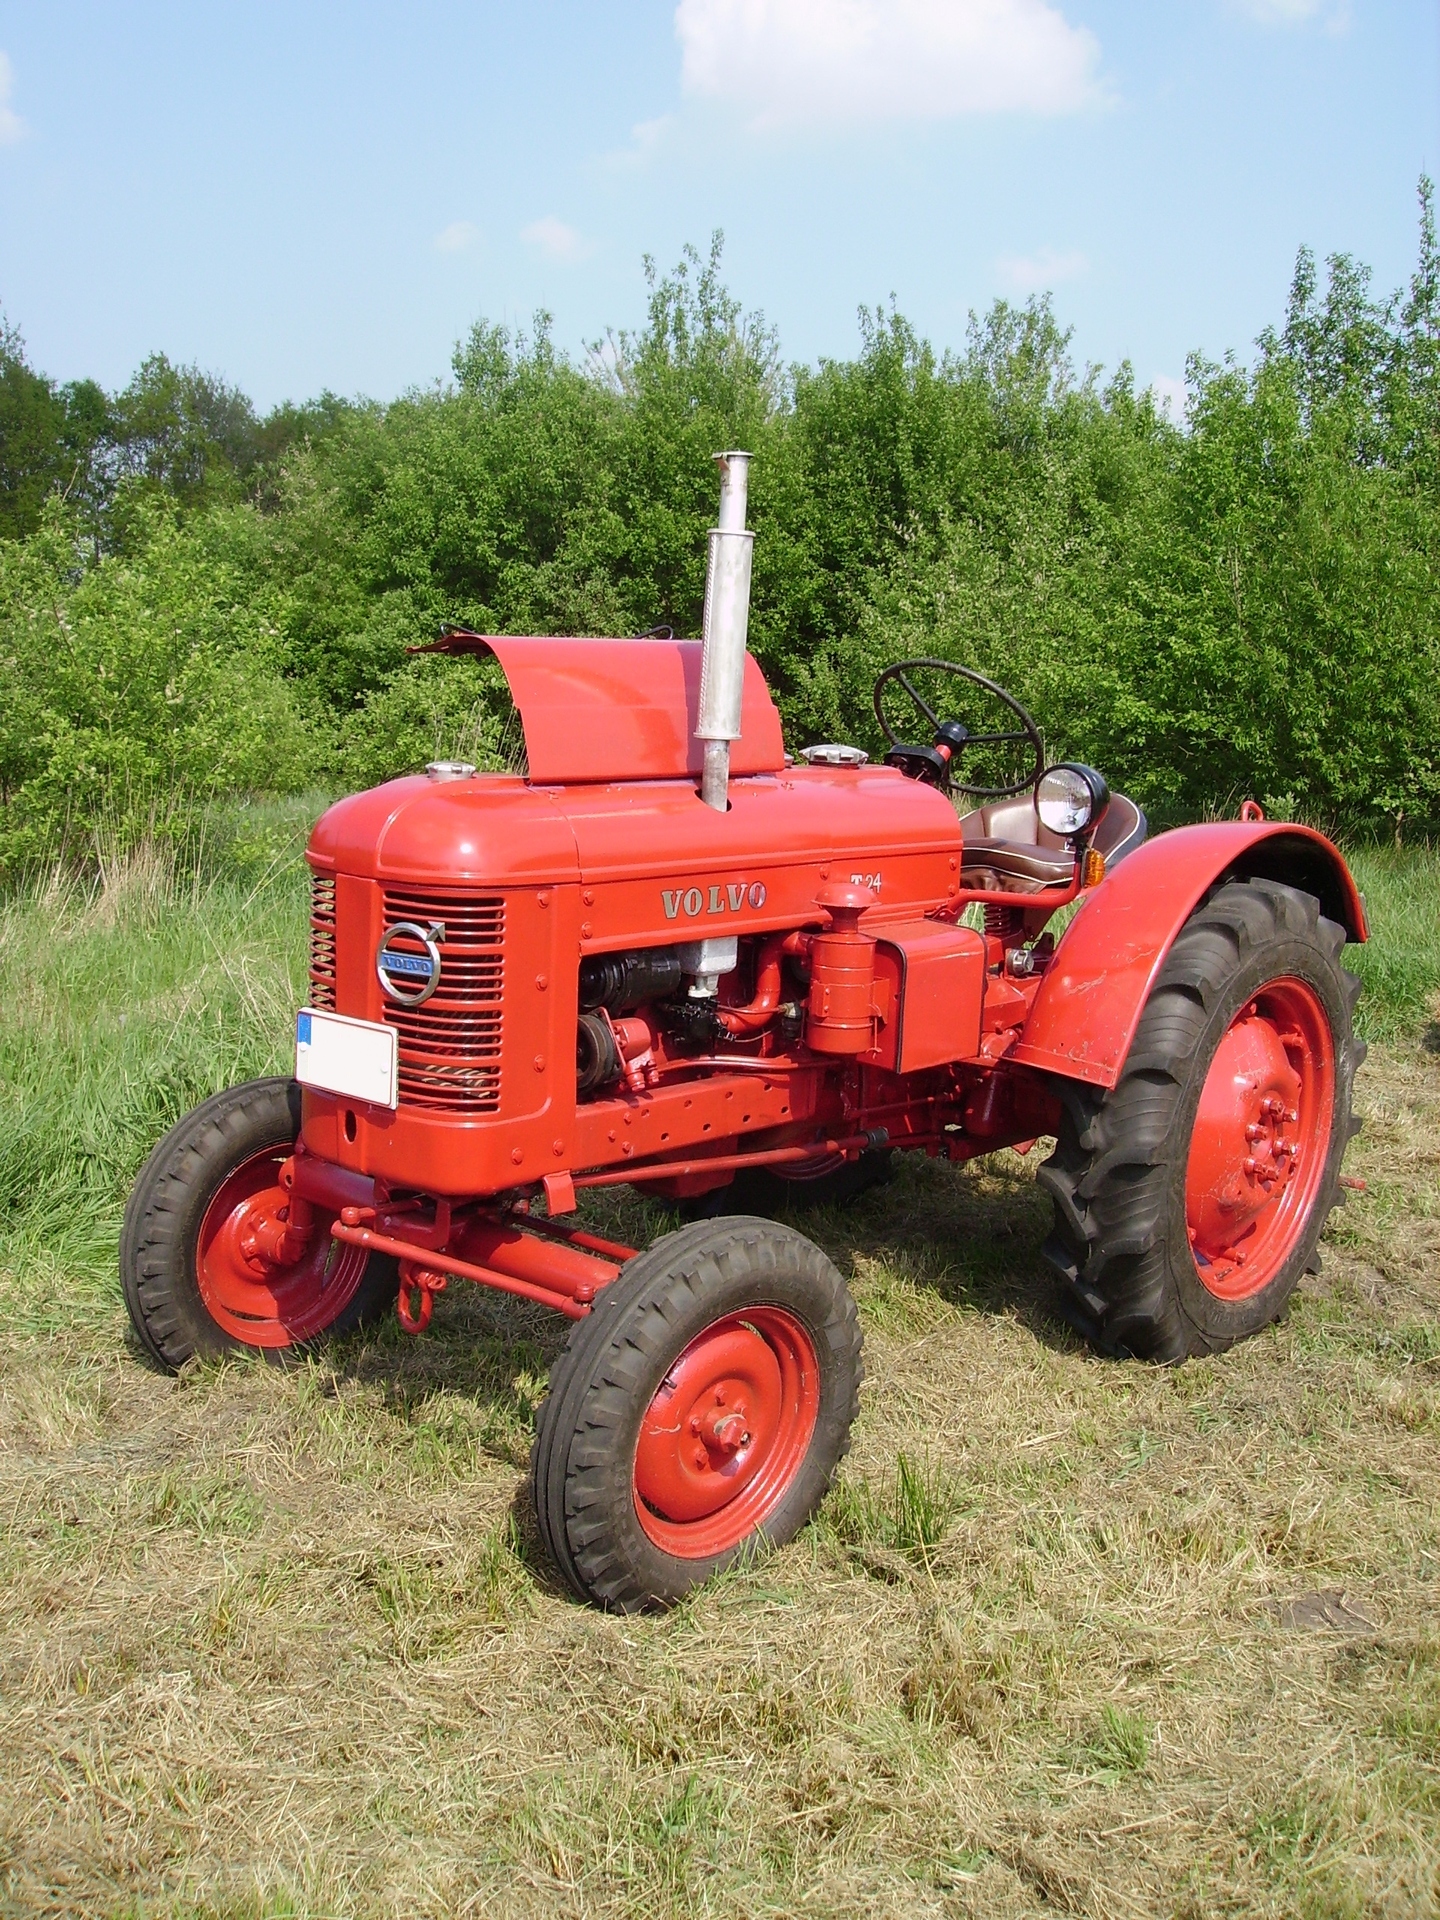 File:Volvo T24 tractor.jpg